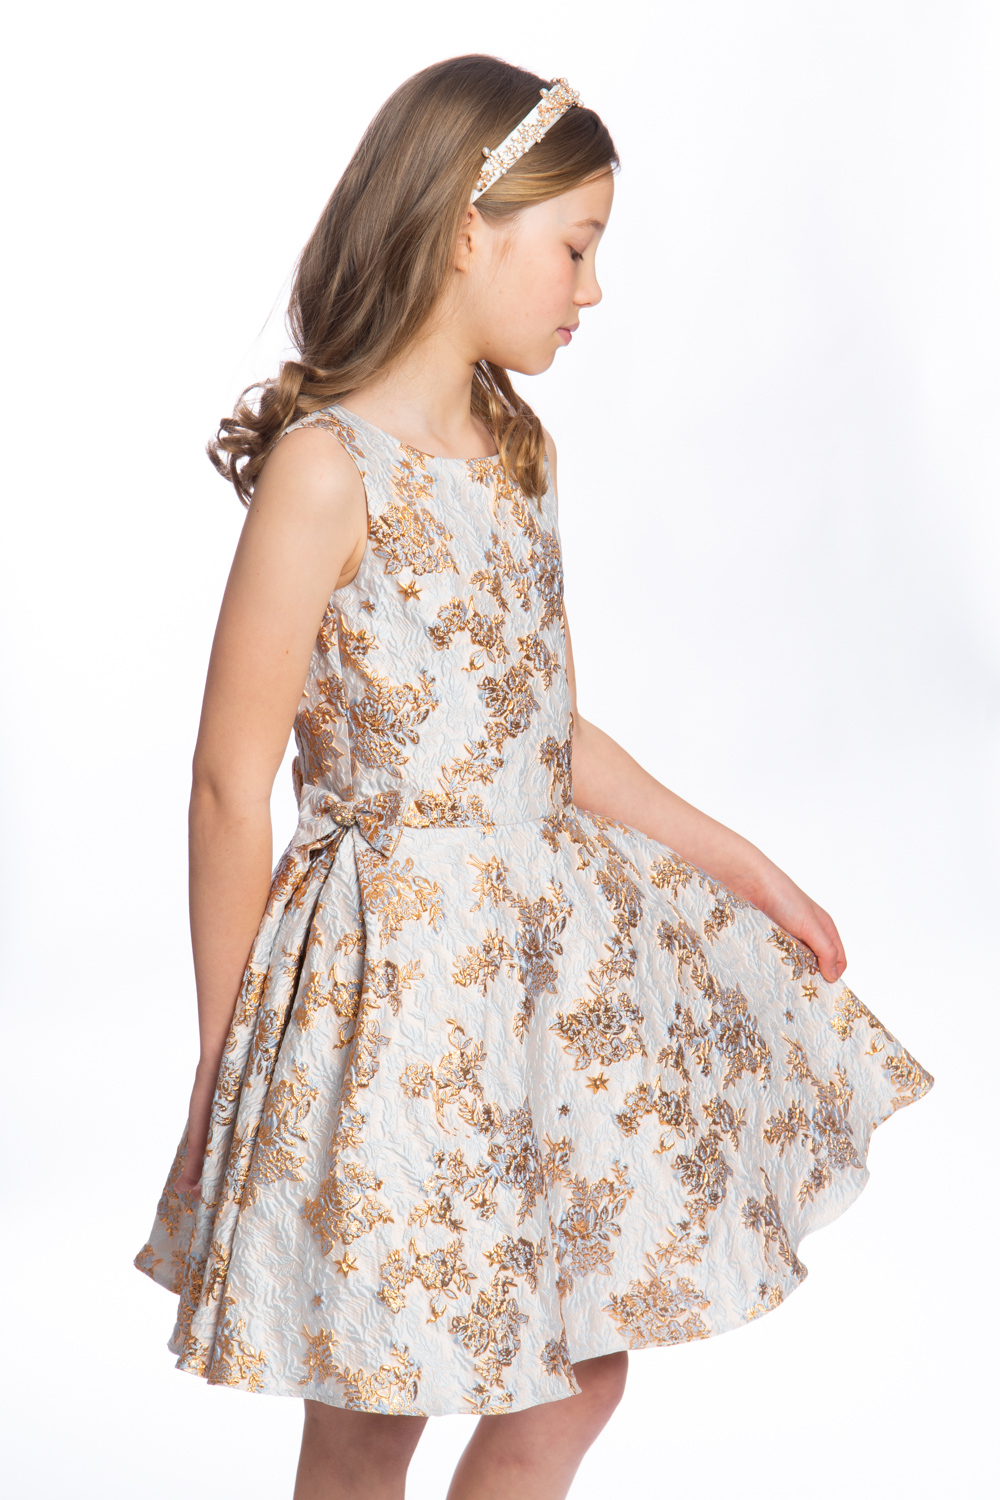 Shop Girls Designer Dresses Online | David Charles Childrenswear